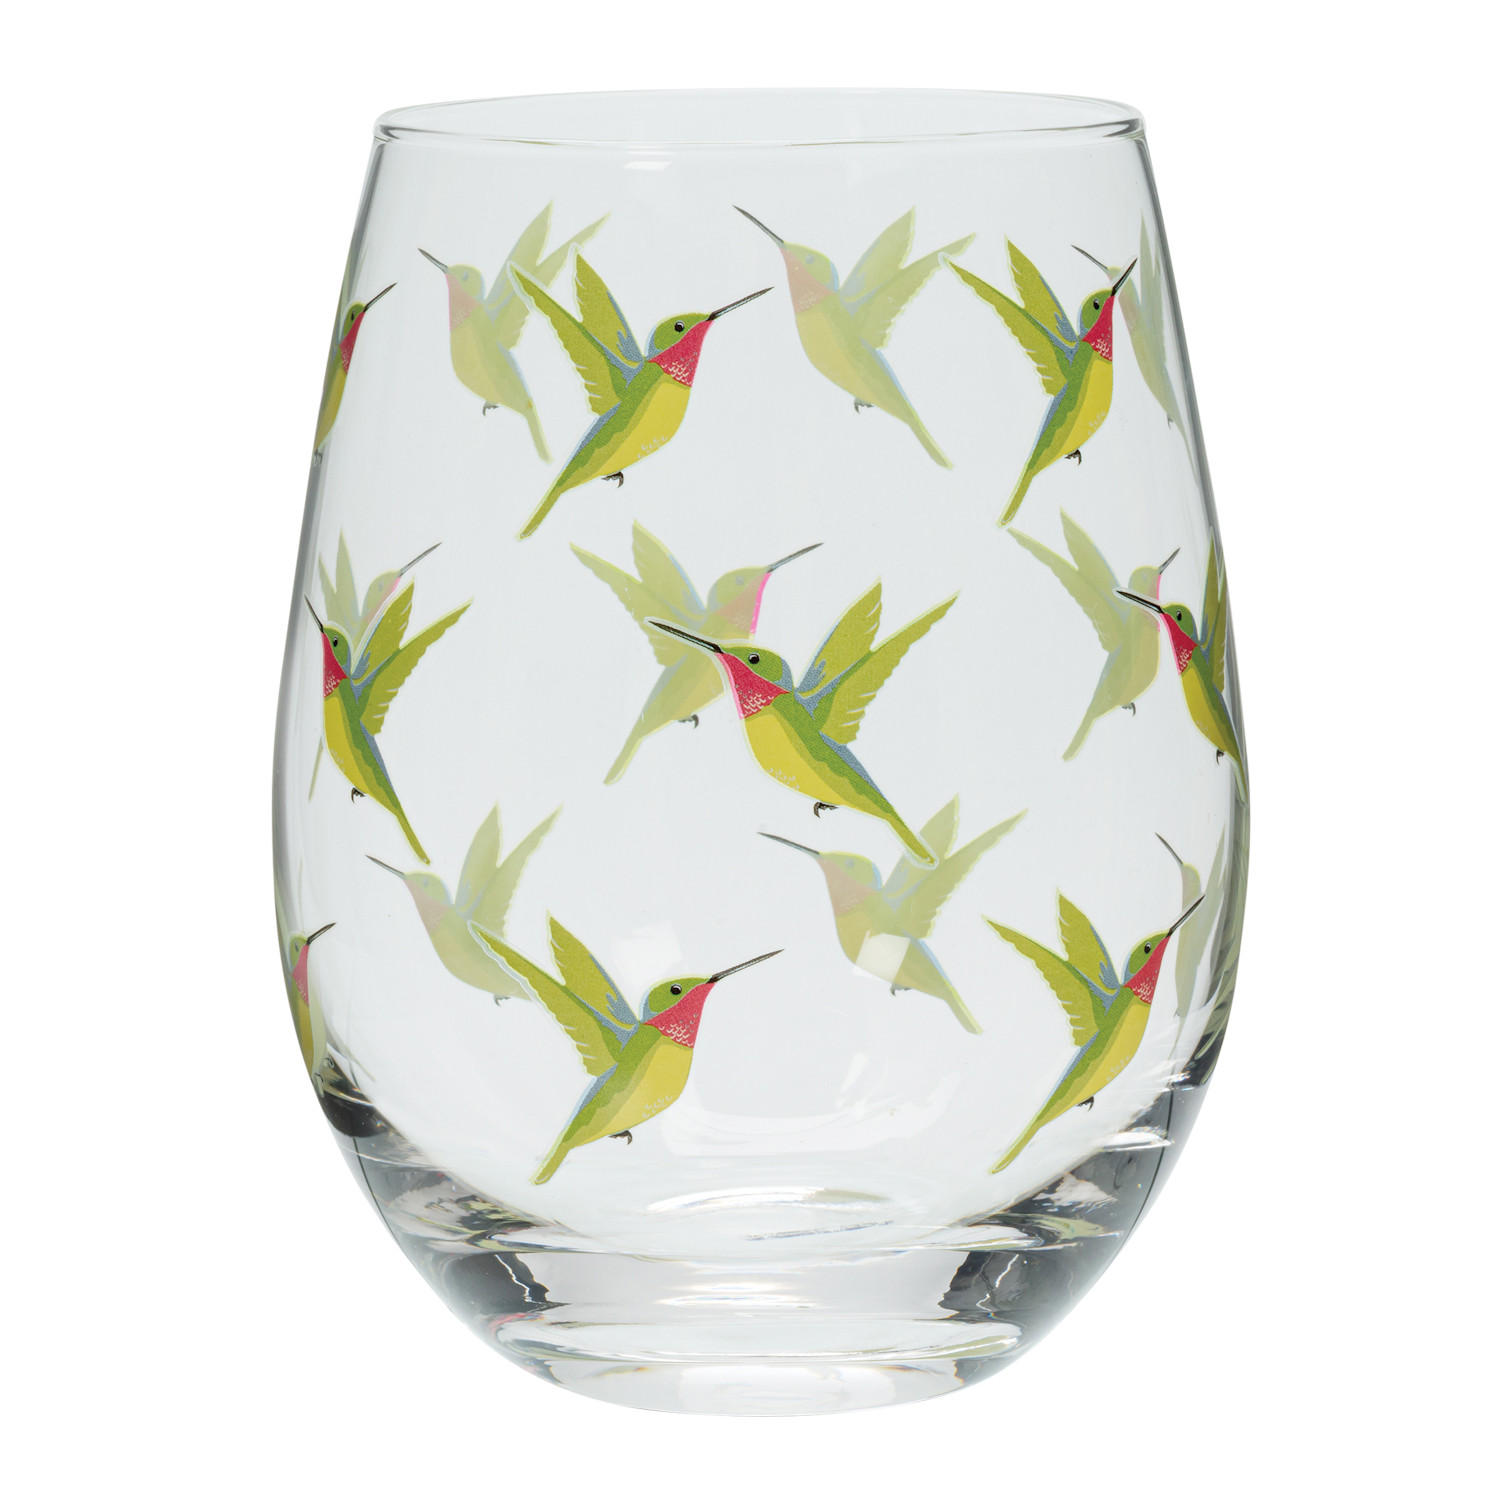 Hummingbird stemless wine glass set of 4